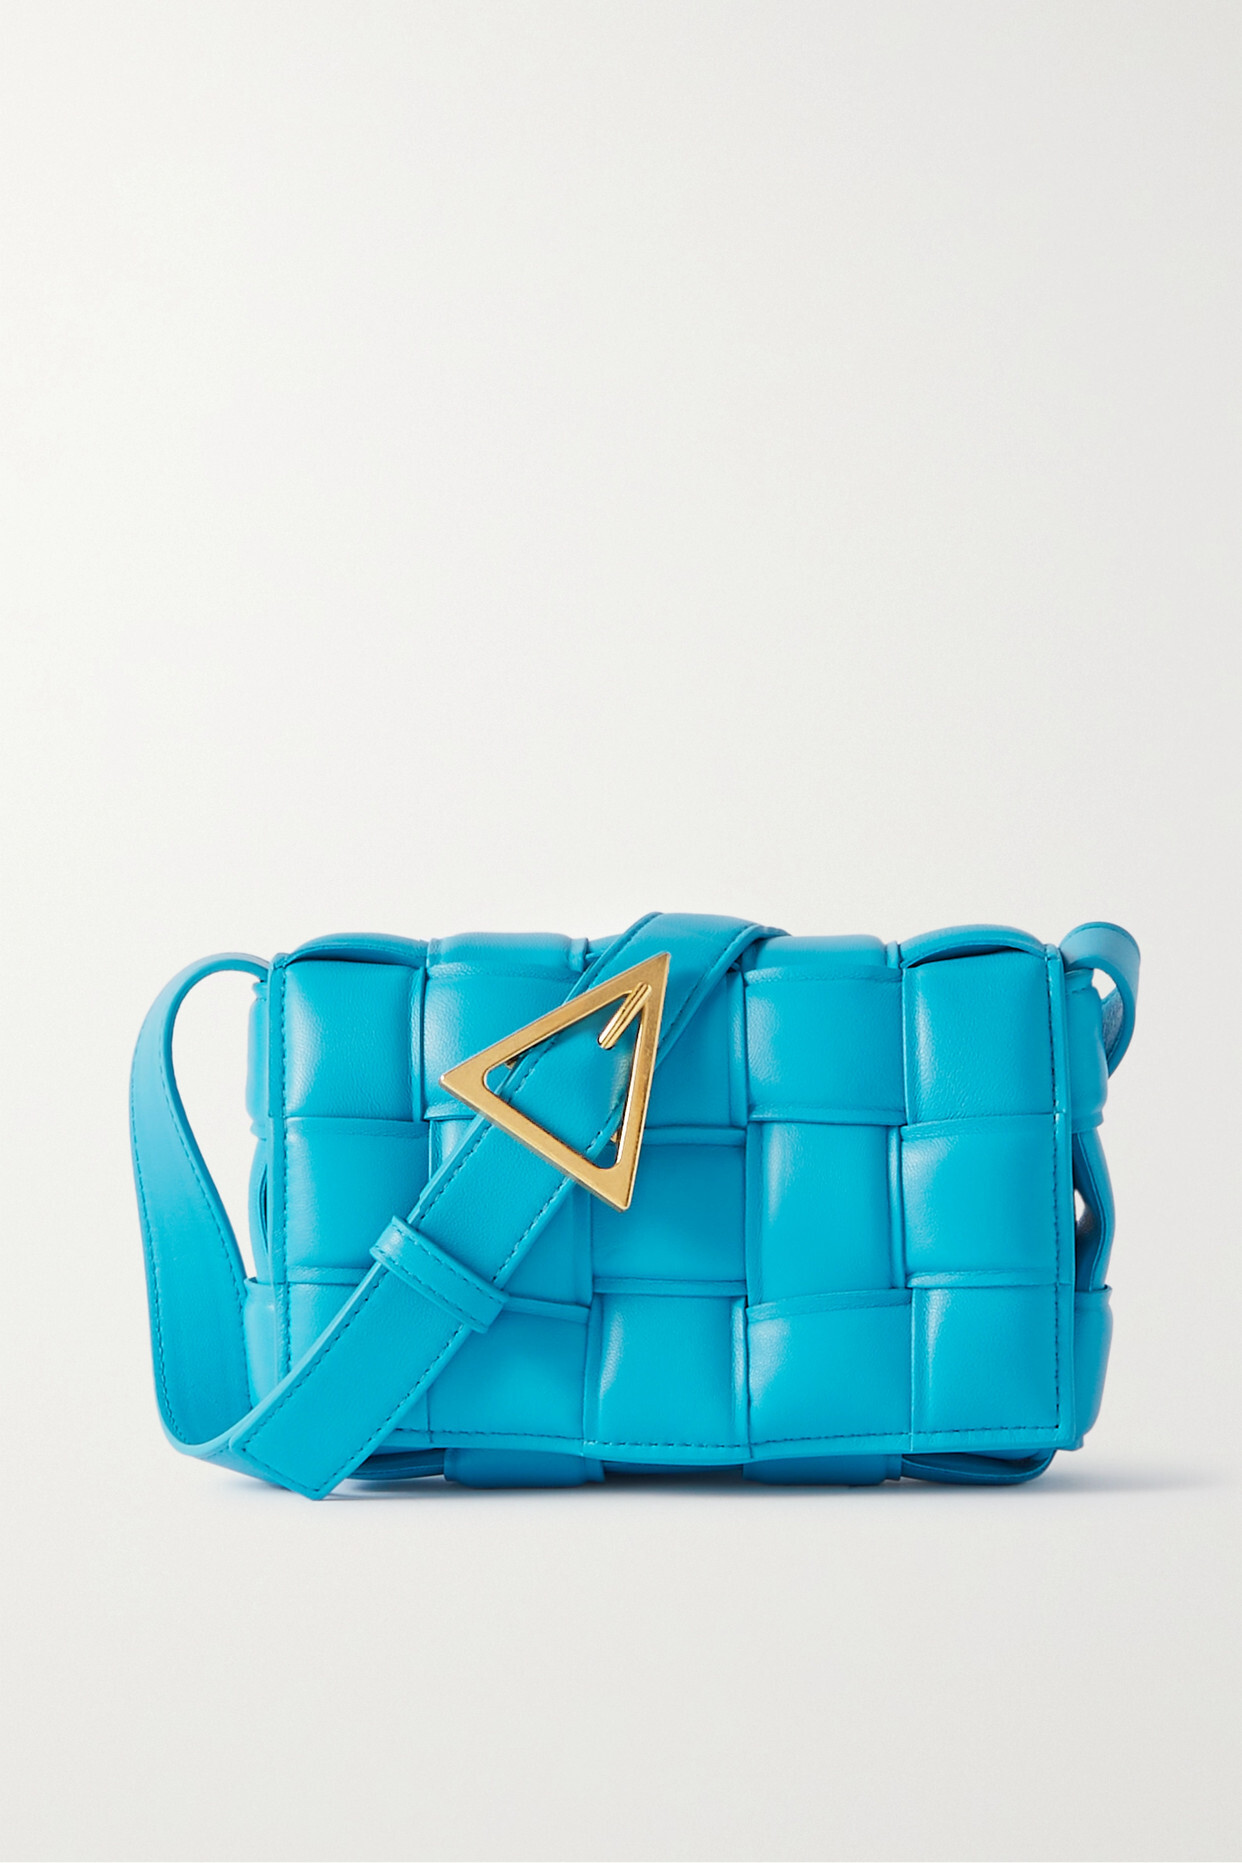 Bottega Veneta - Cassette Small Padded Intrecciato Leather Shoulder Bag - Blue